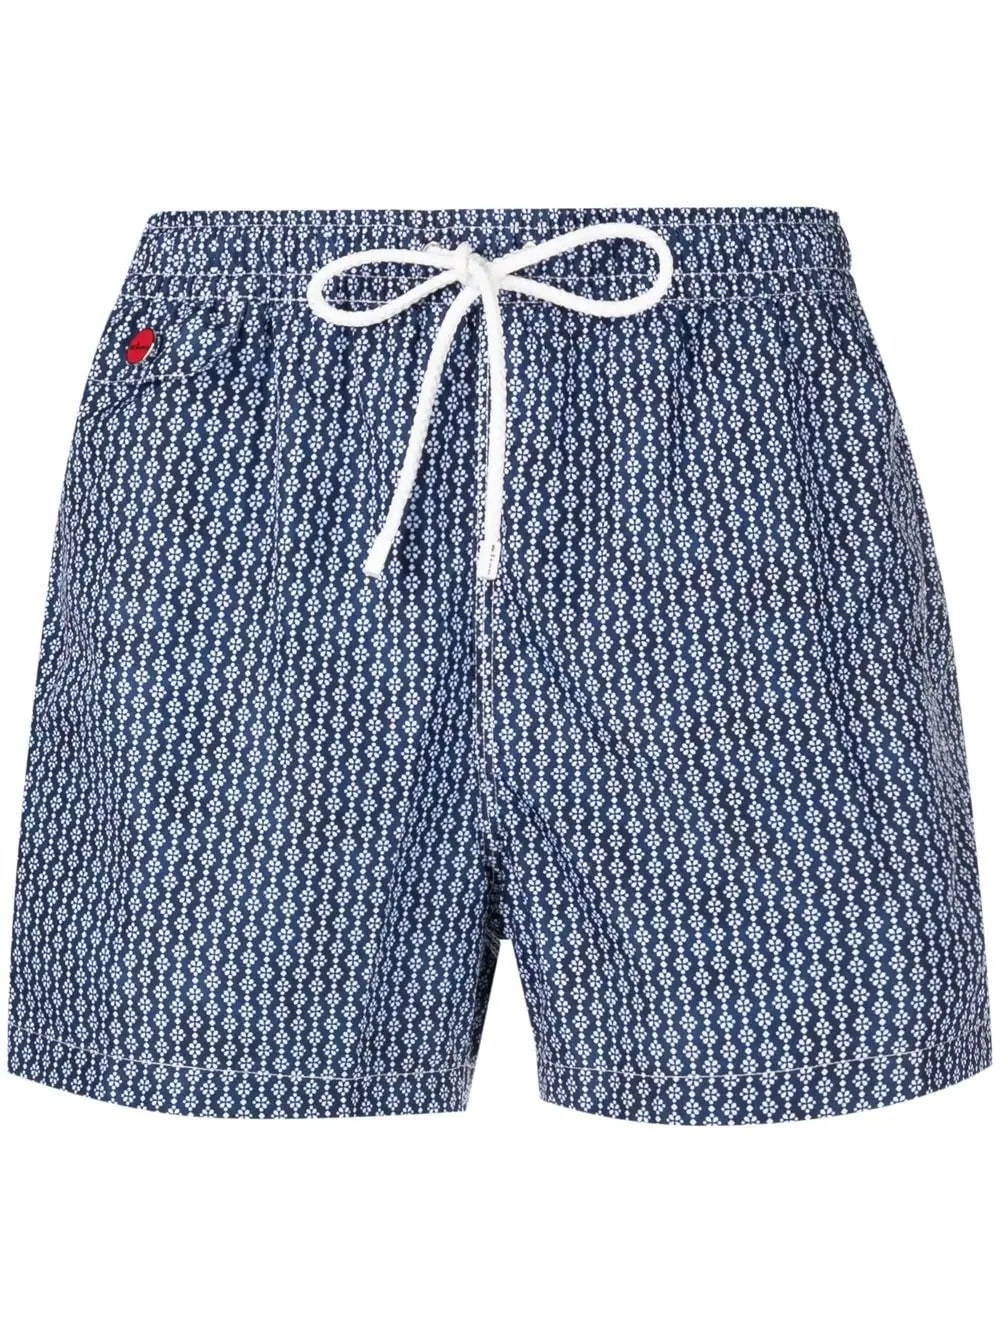 Kiton Navy Blue Swim Shorts With White Geometric Floral Micro Pattern